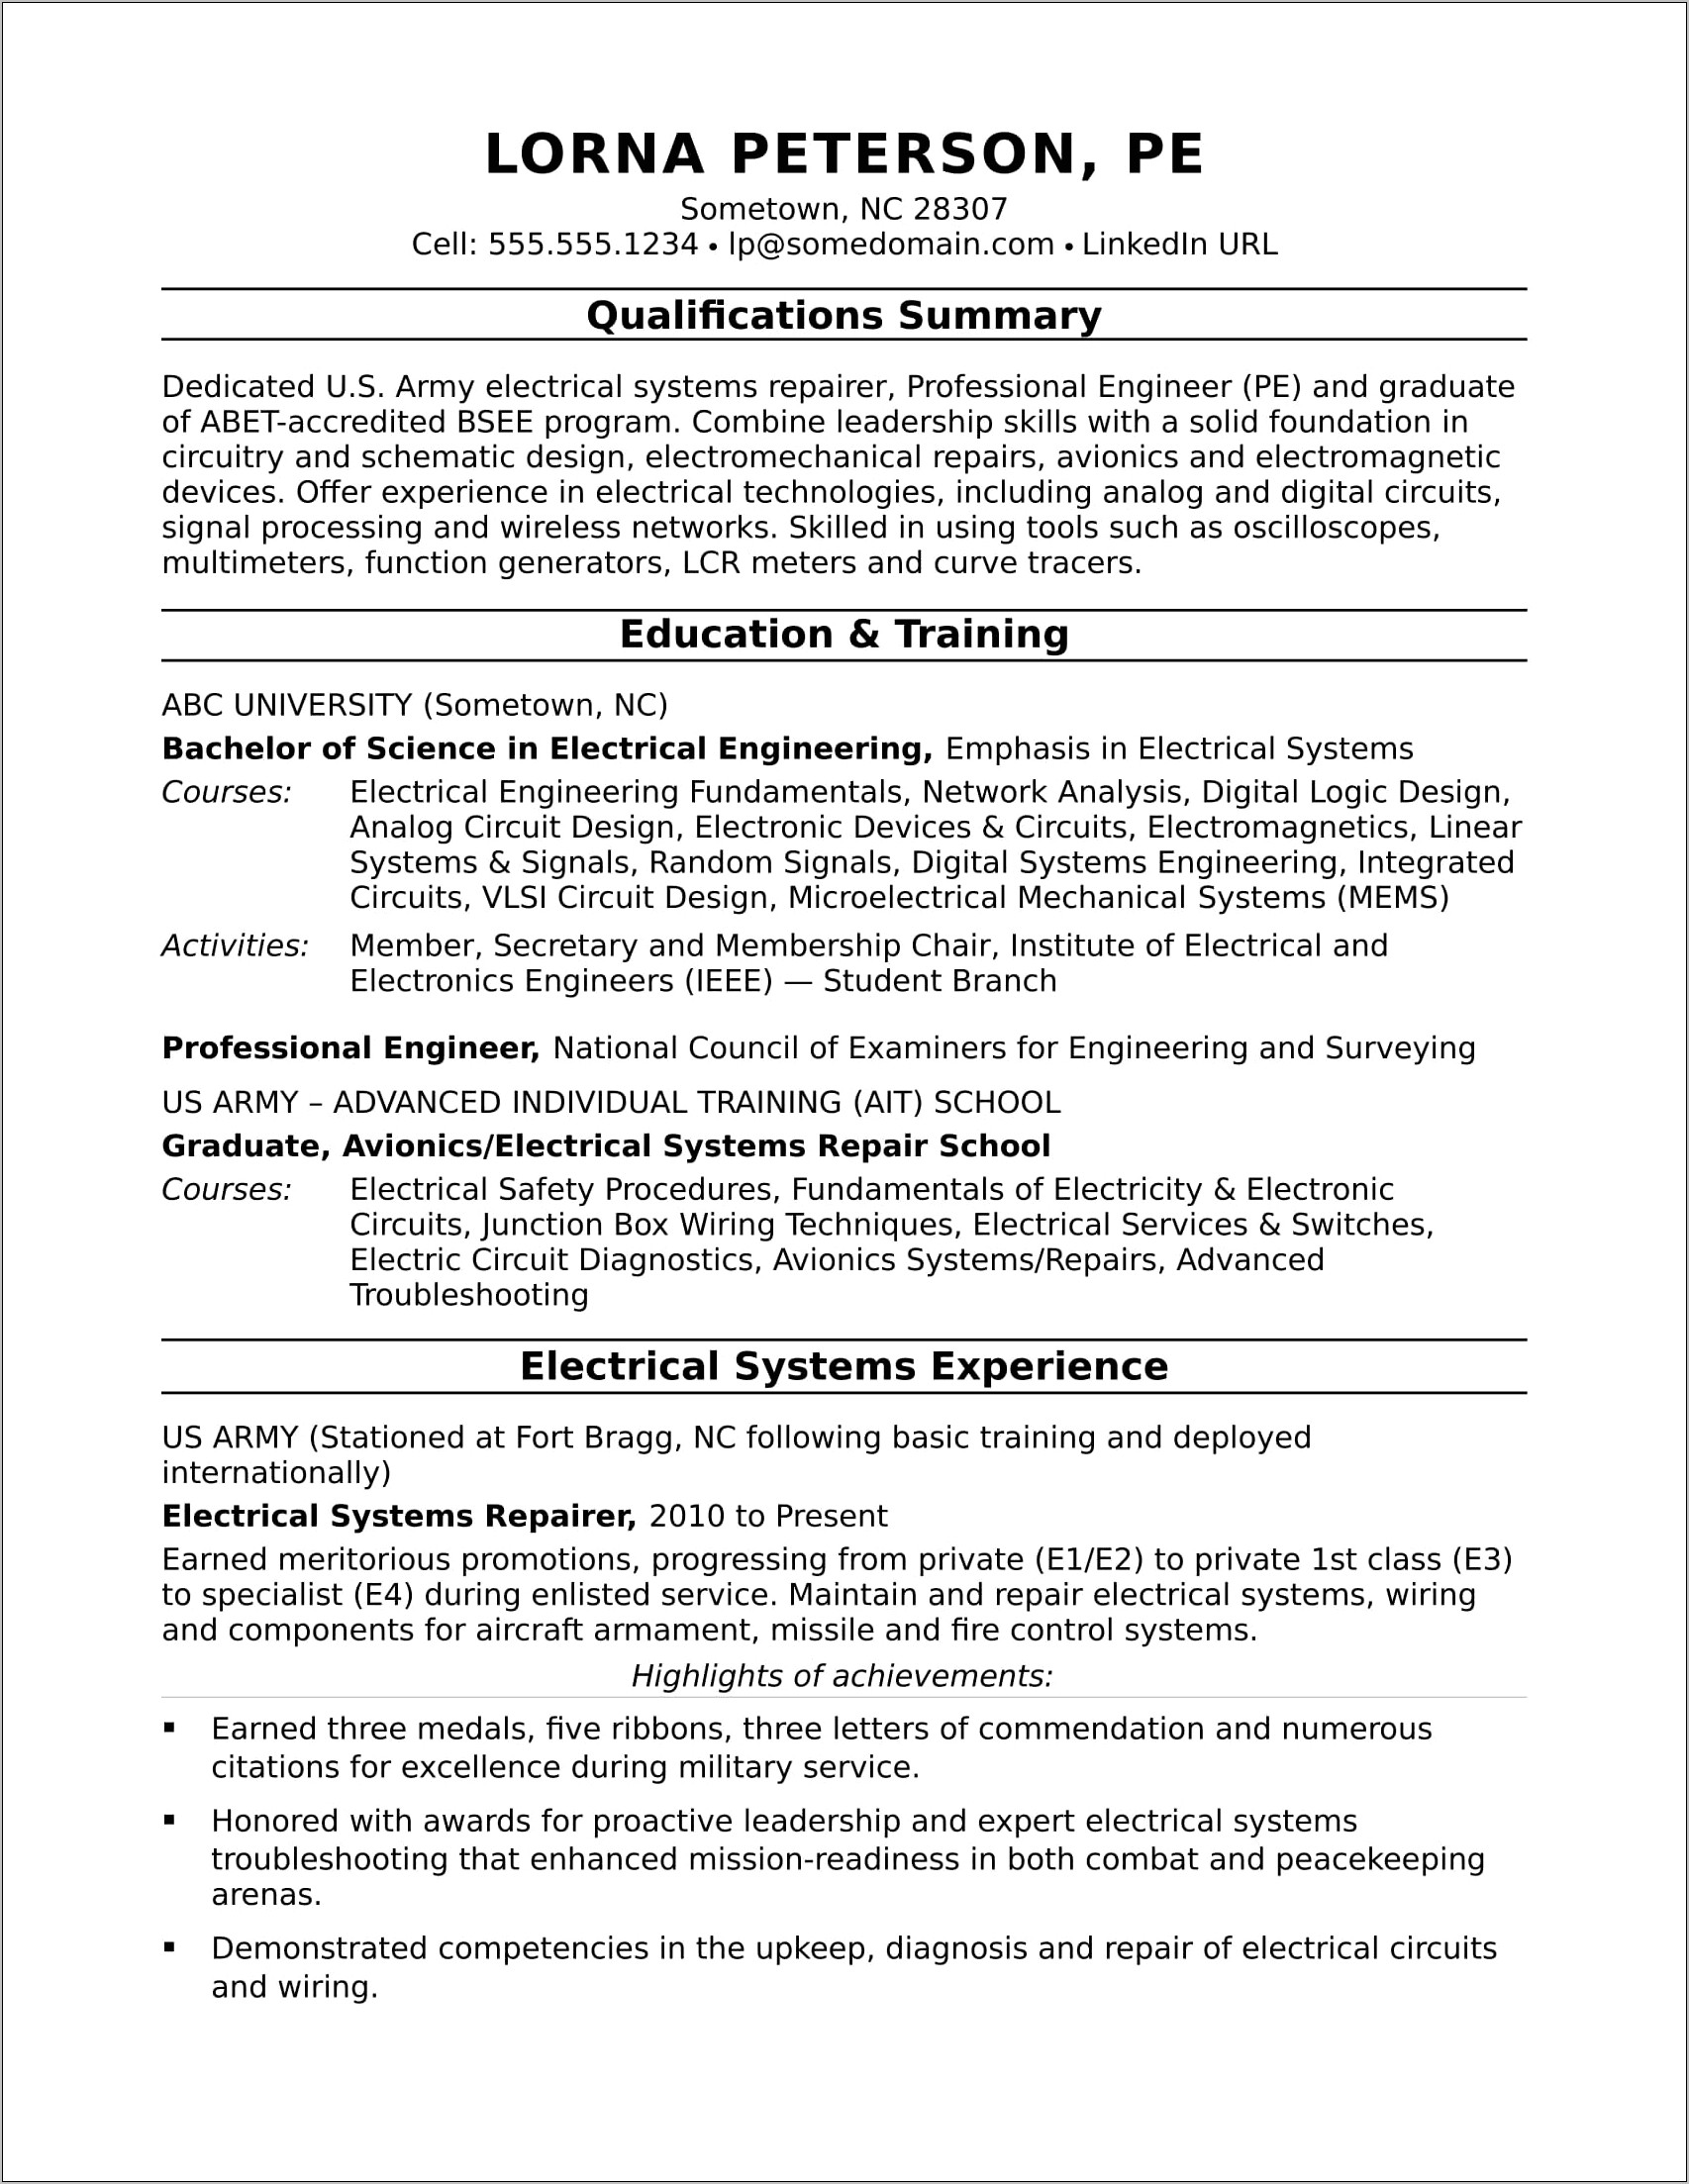 Resume Summary Example For Engineer Resume